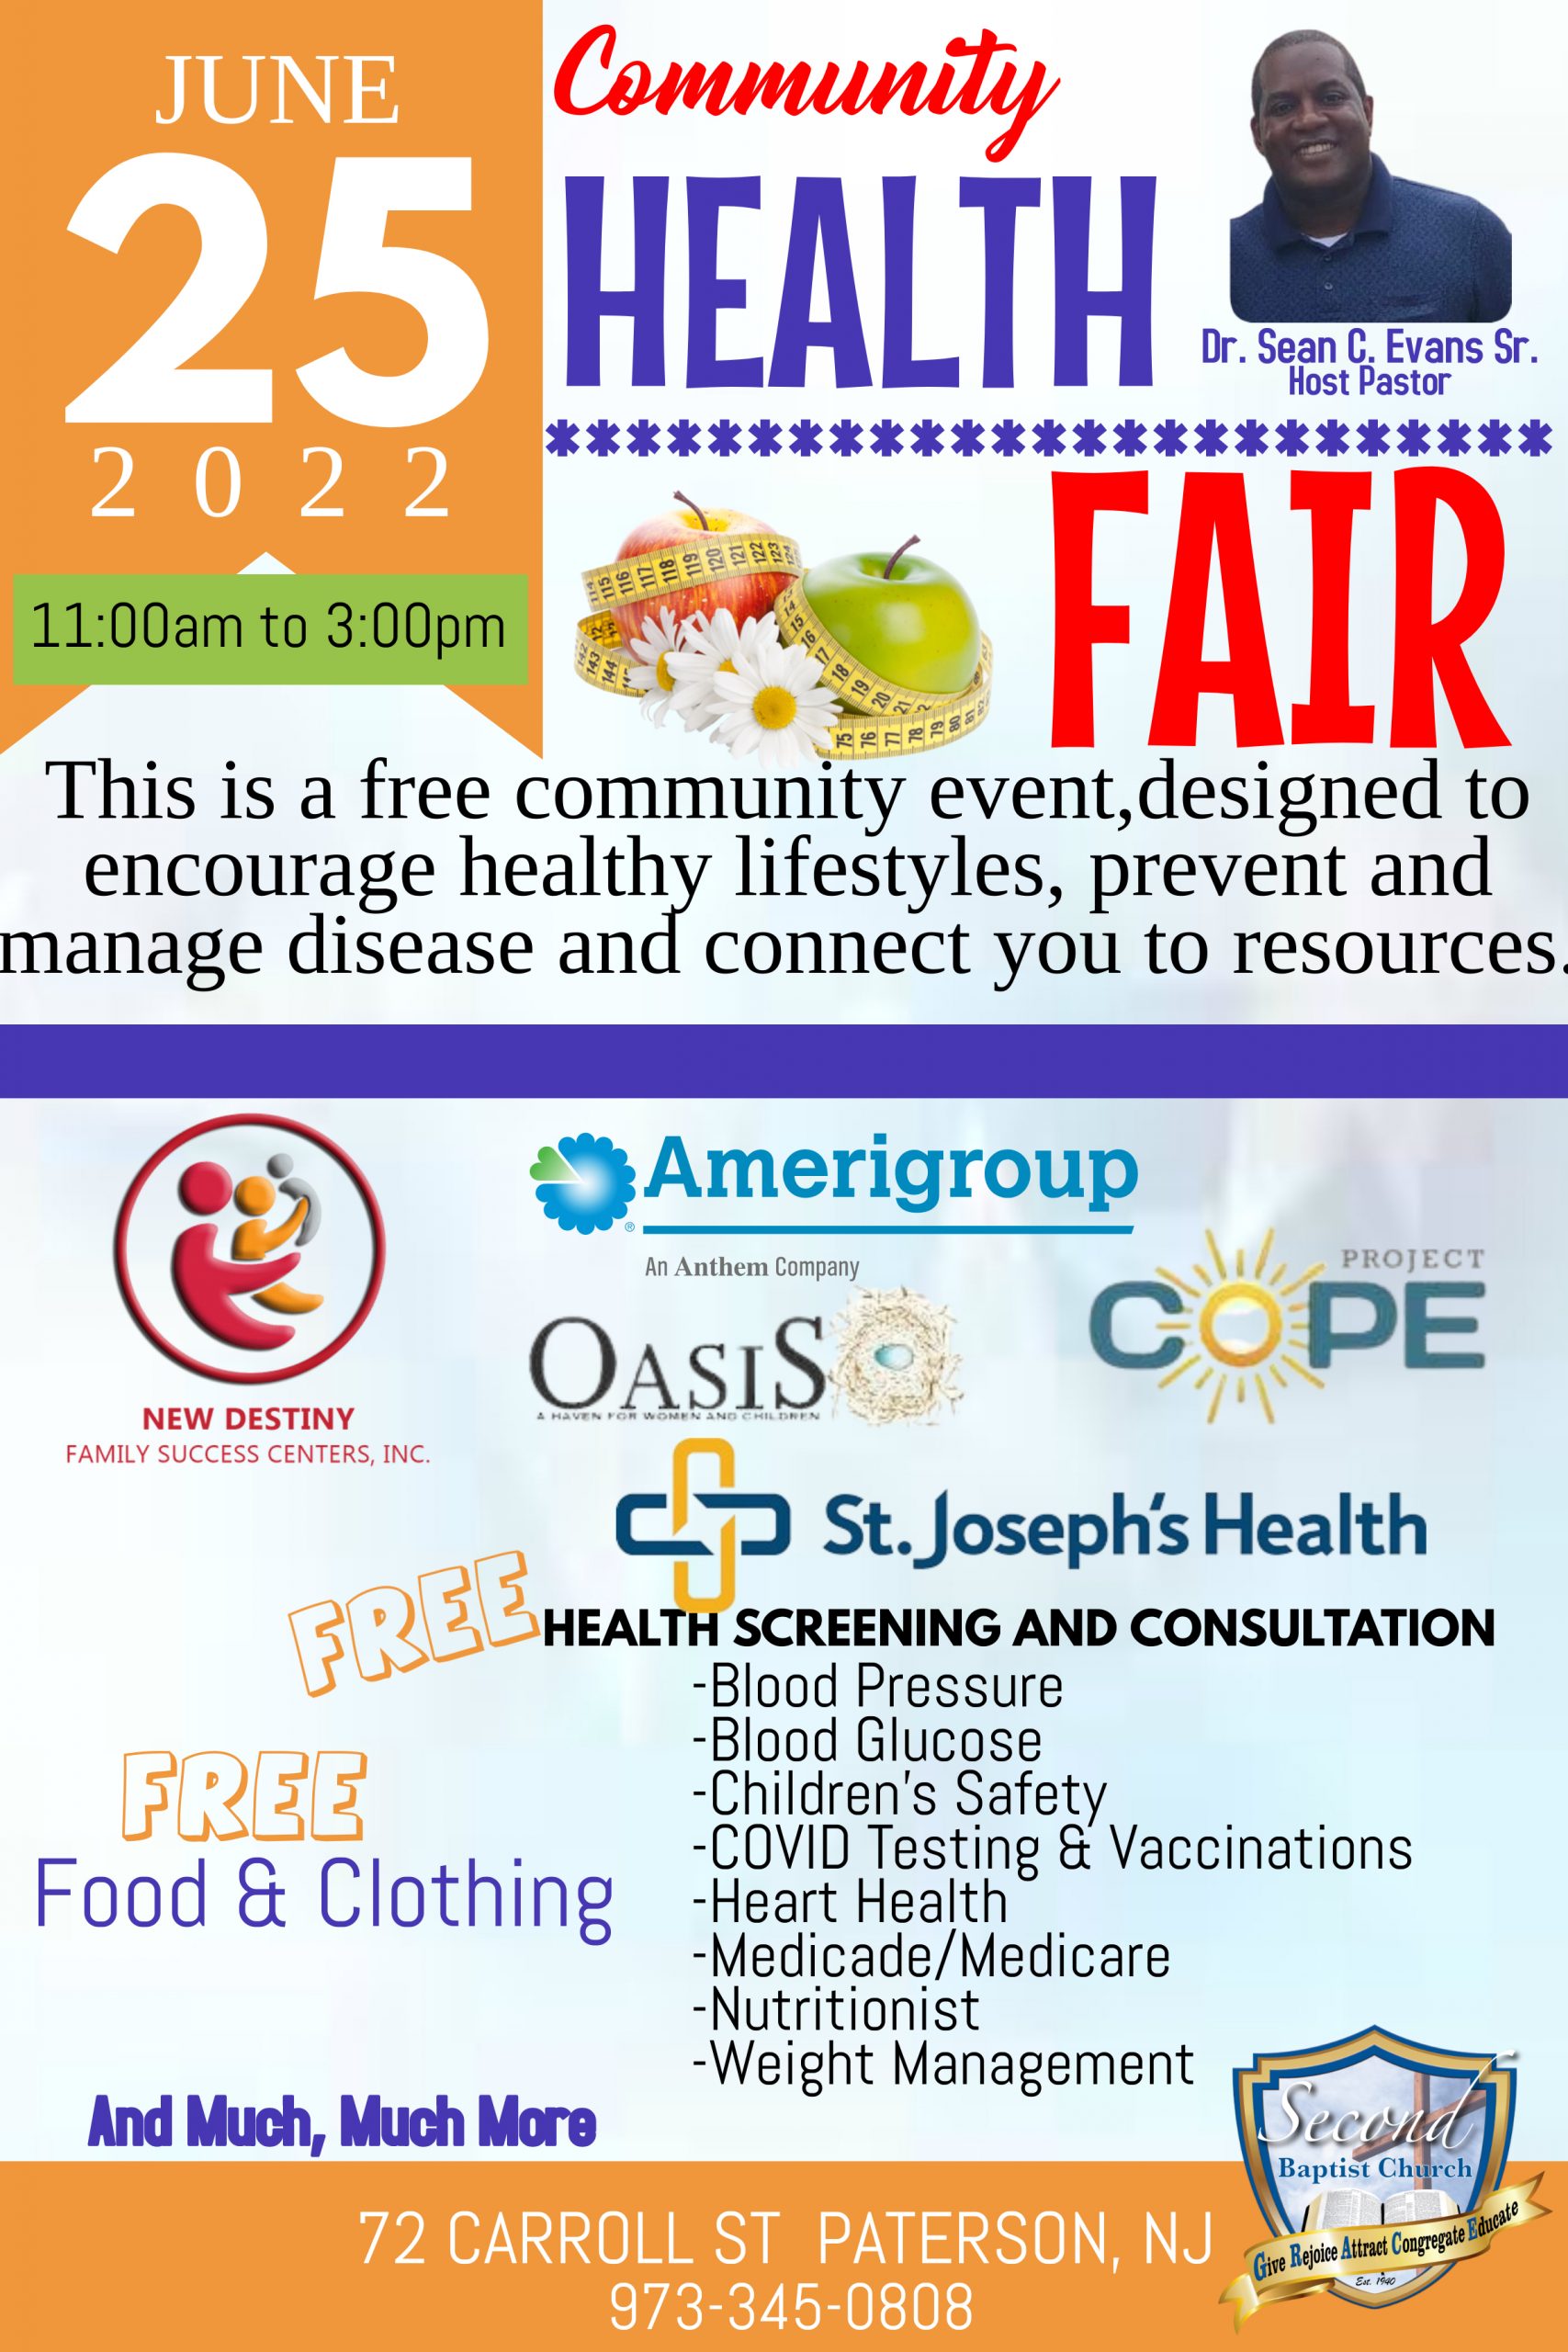 Copy of Community Health Fair